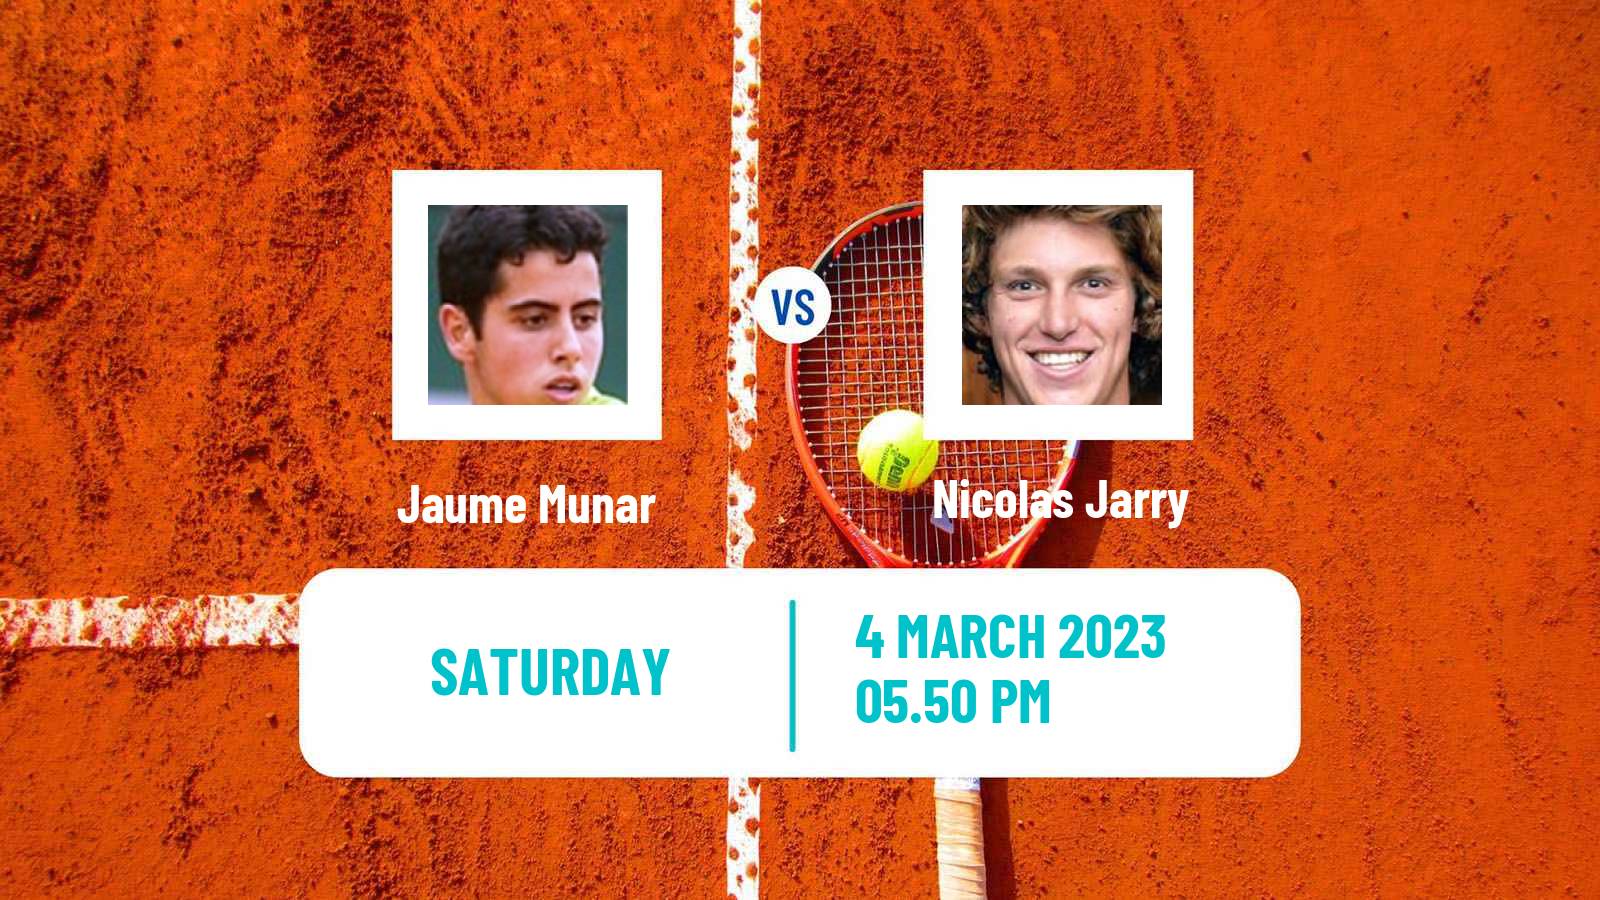 Tennis ATP Santiago Jaume Munar - Nicolas Jarry